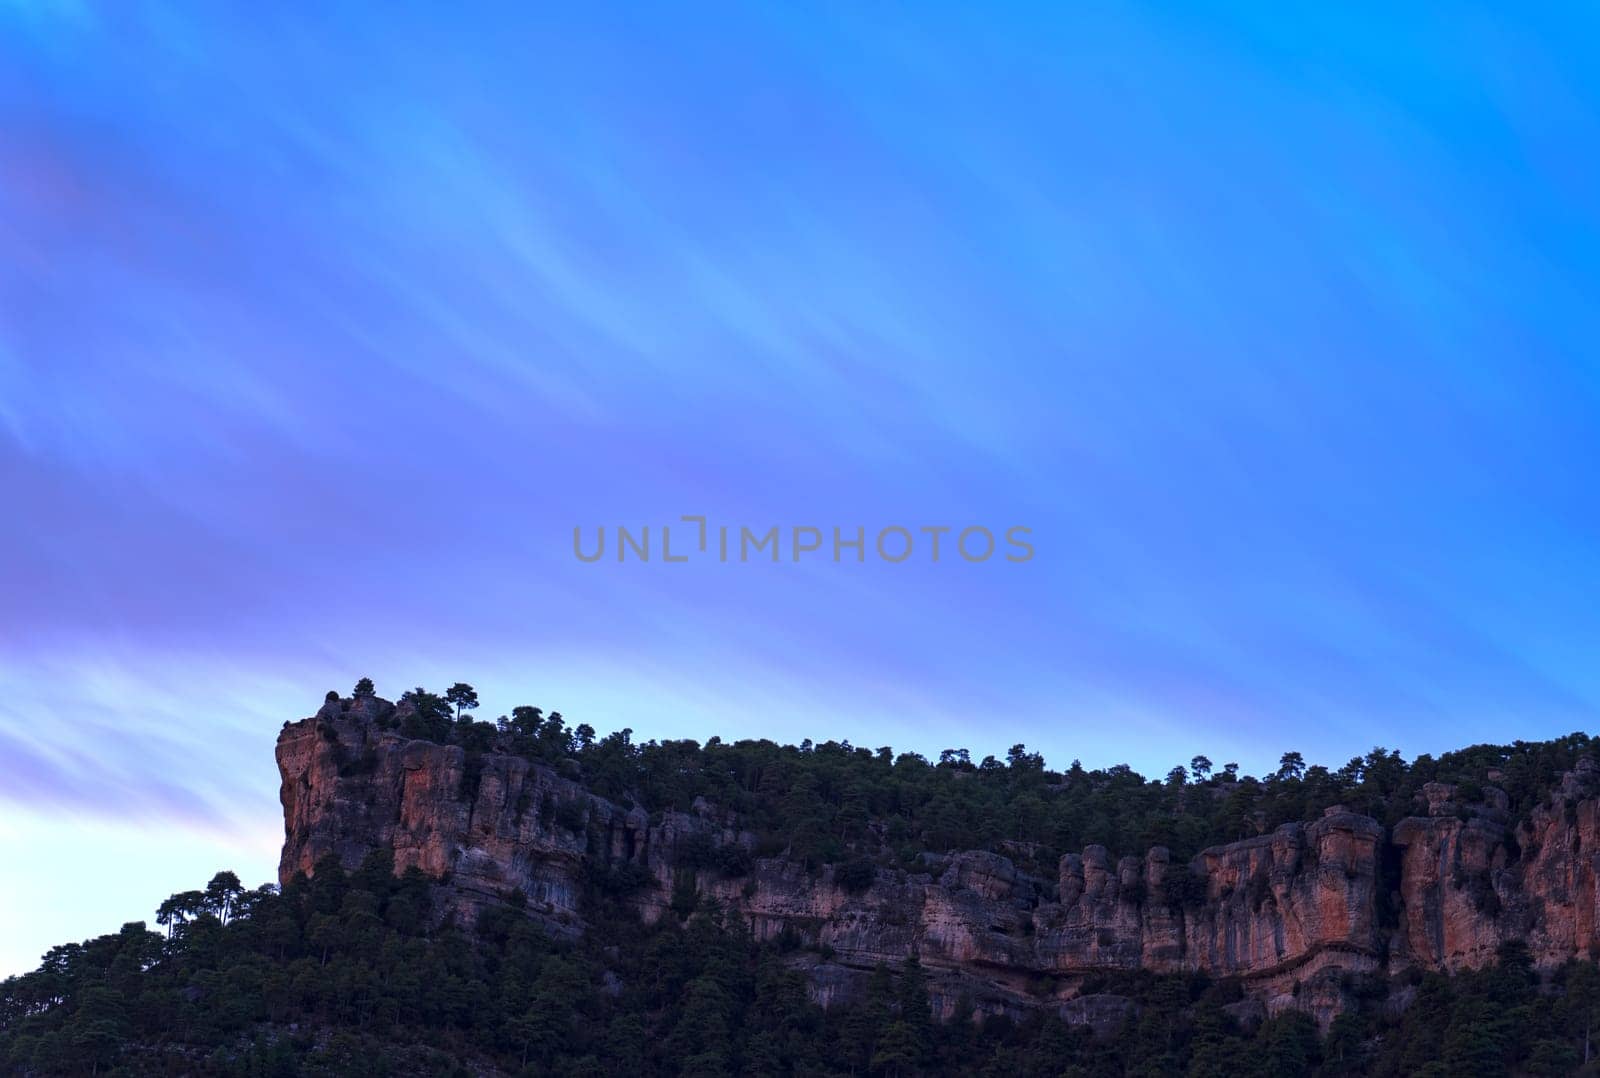 Majestic Cliff Formation Against a Streaked Twilight Sky by FerradalFCG